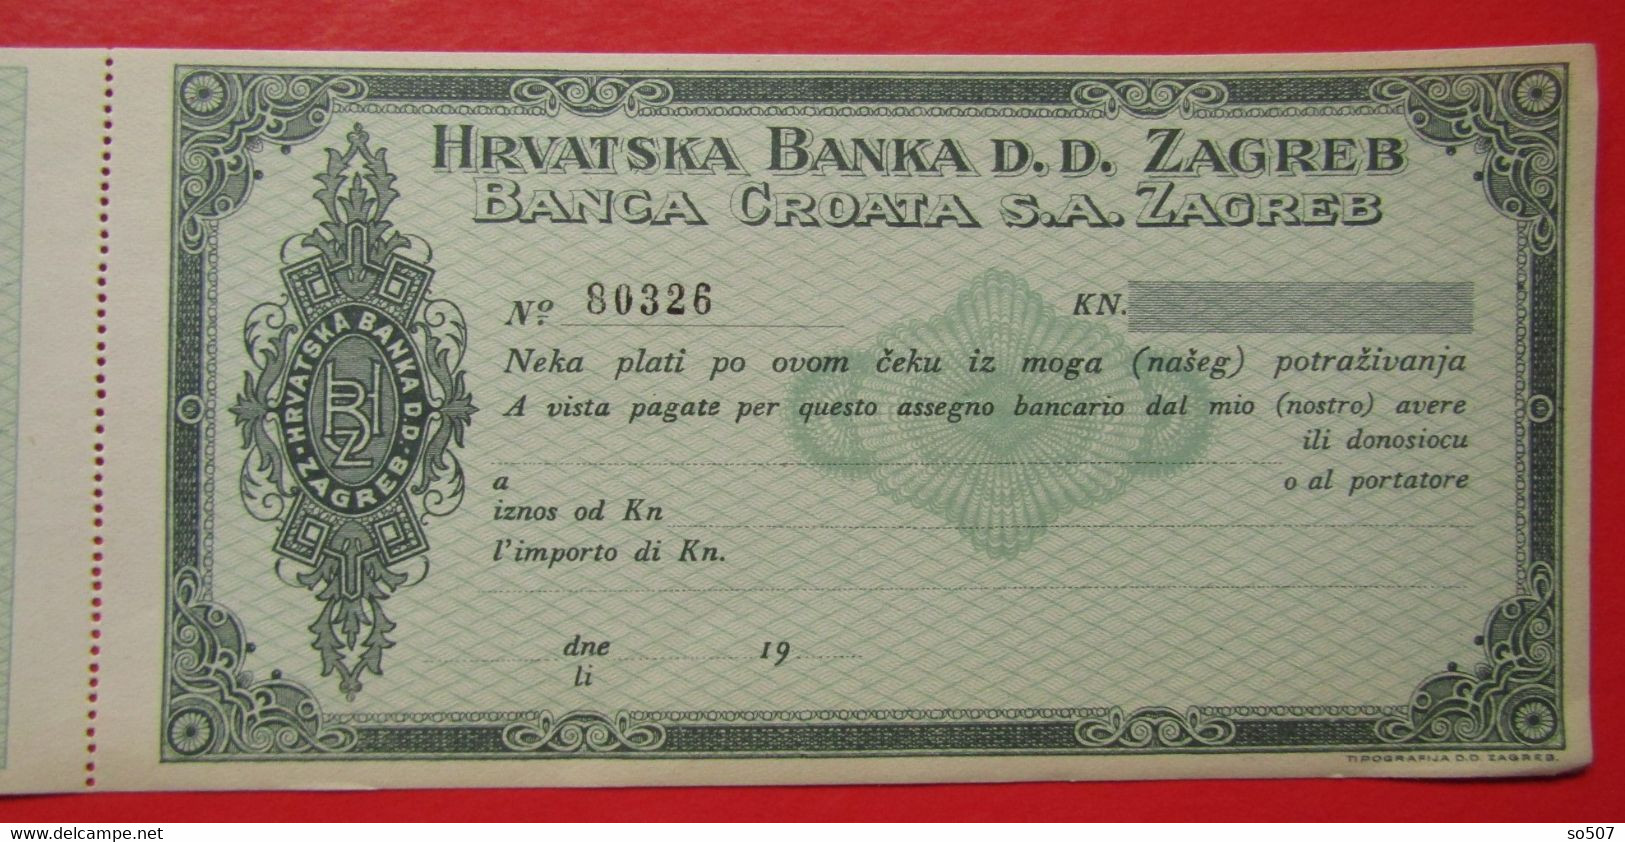 X1- Check, Cheque, Promissory Note, Bill Of Exchange- Croatian Bank, Hrvatska Banka d.d. Zagreb, Kingdom of Yugoslavia